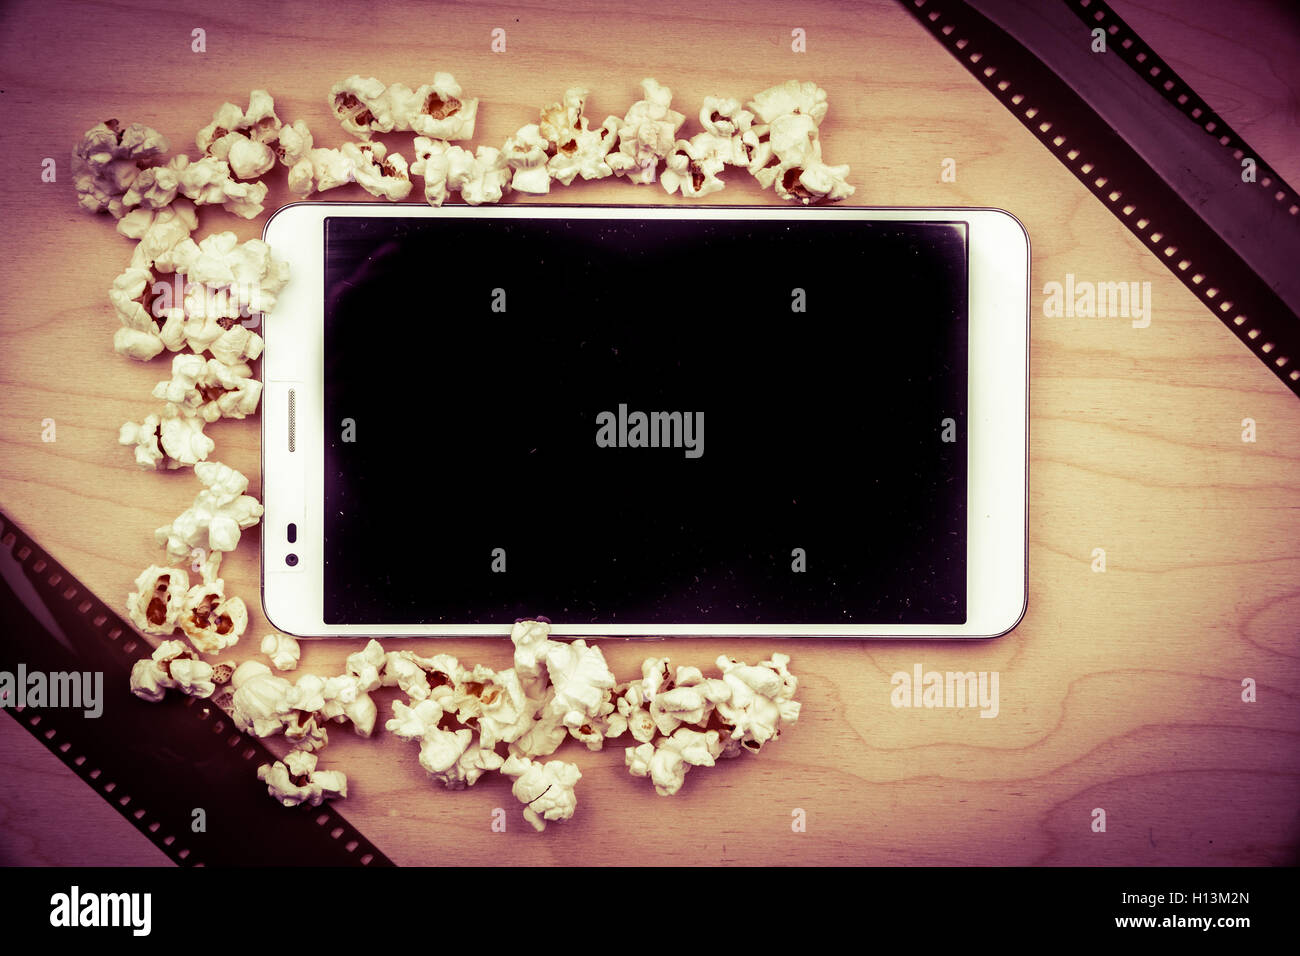 Tablet-pc auf Holz mit Attributen des Kinos. Stockfoto